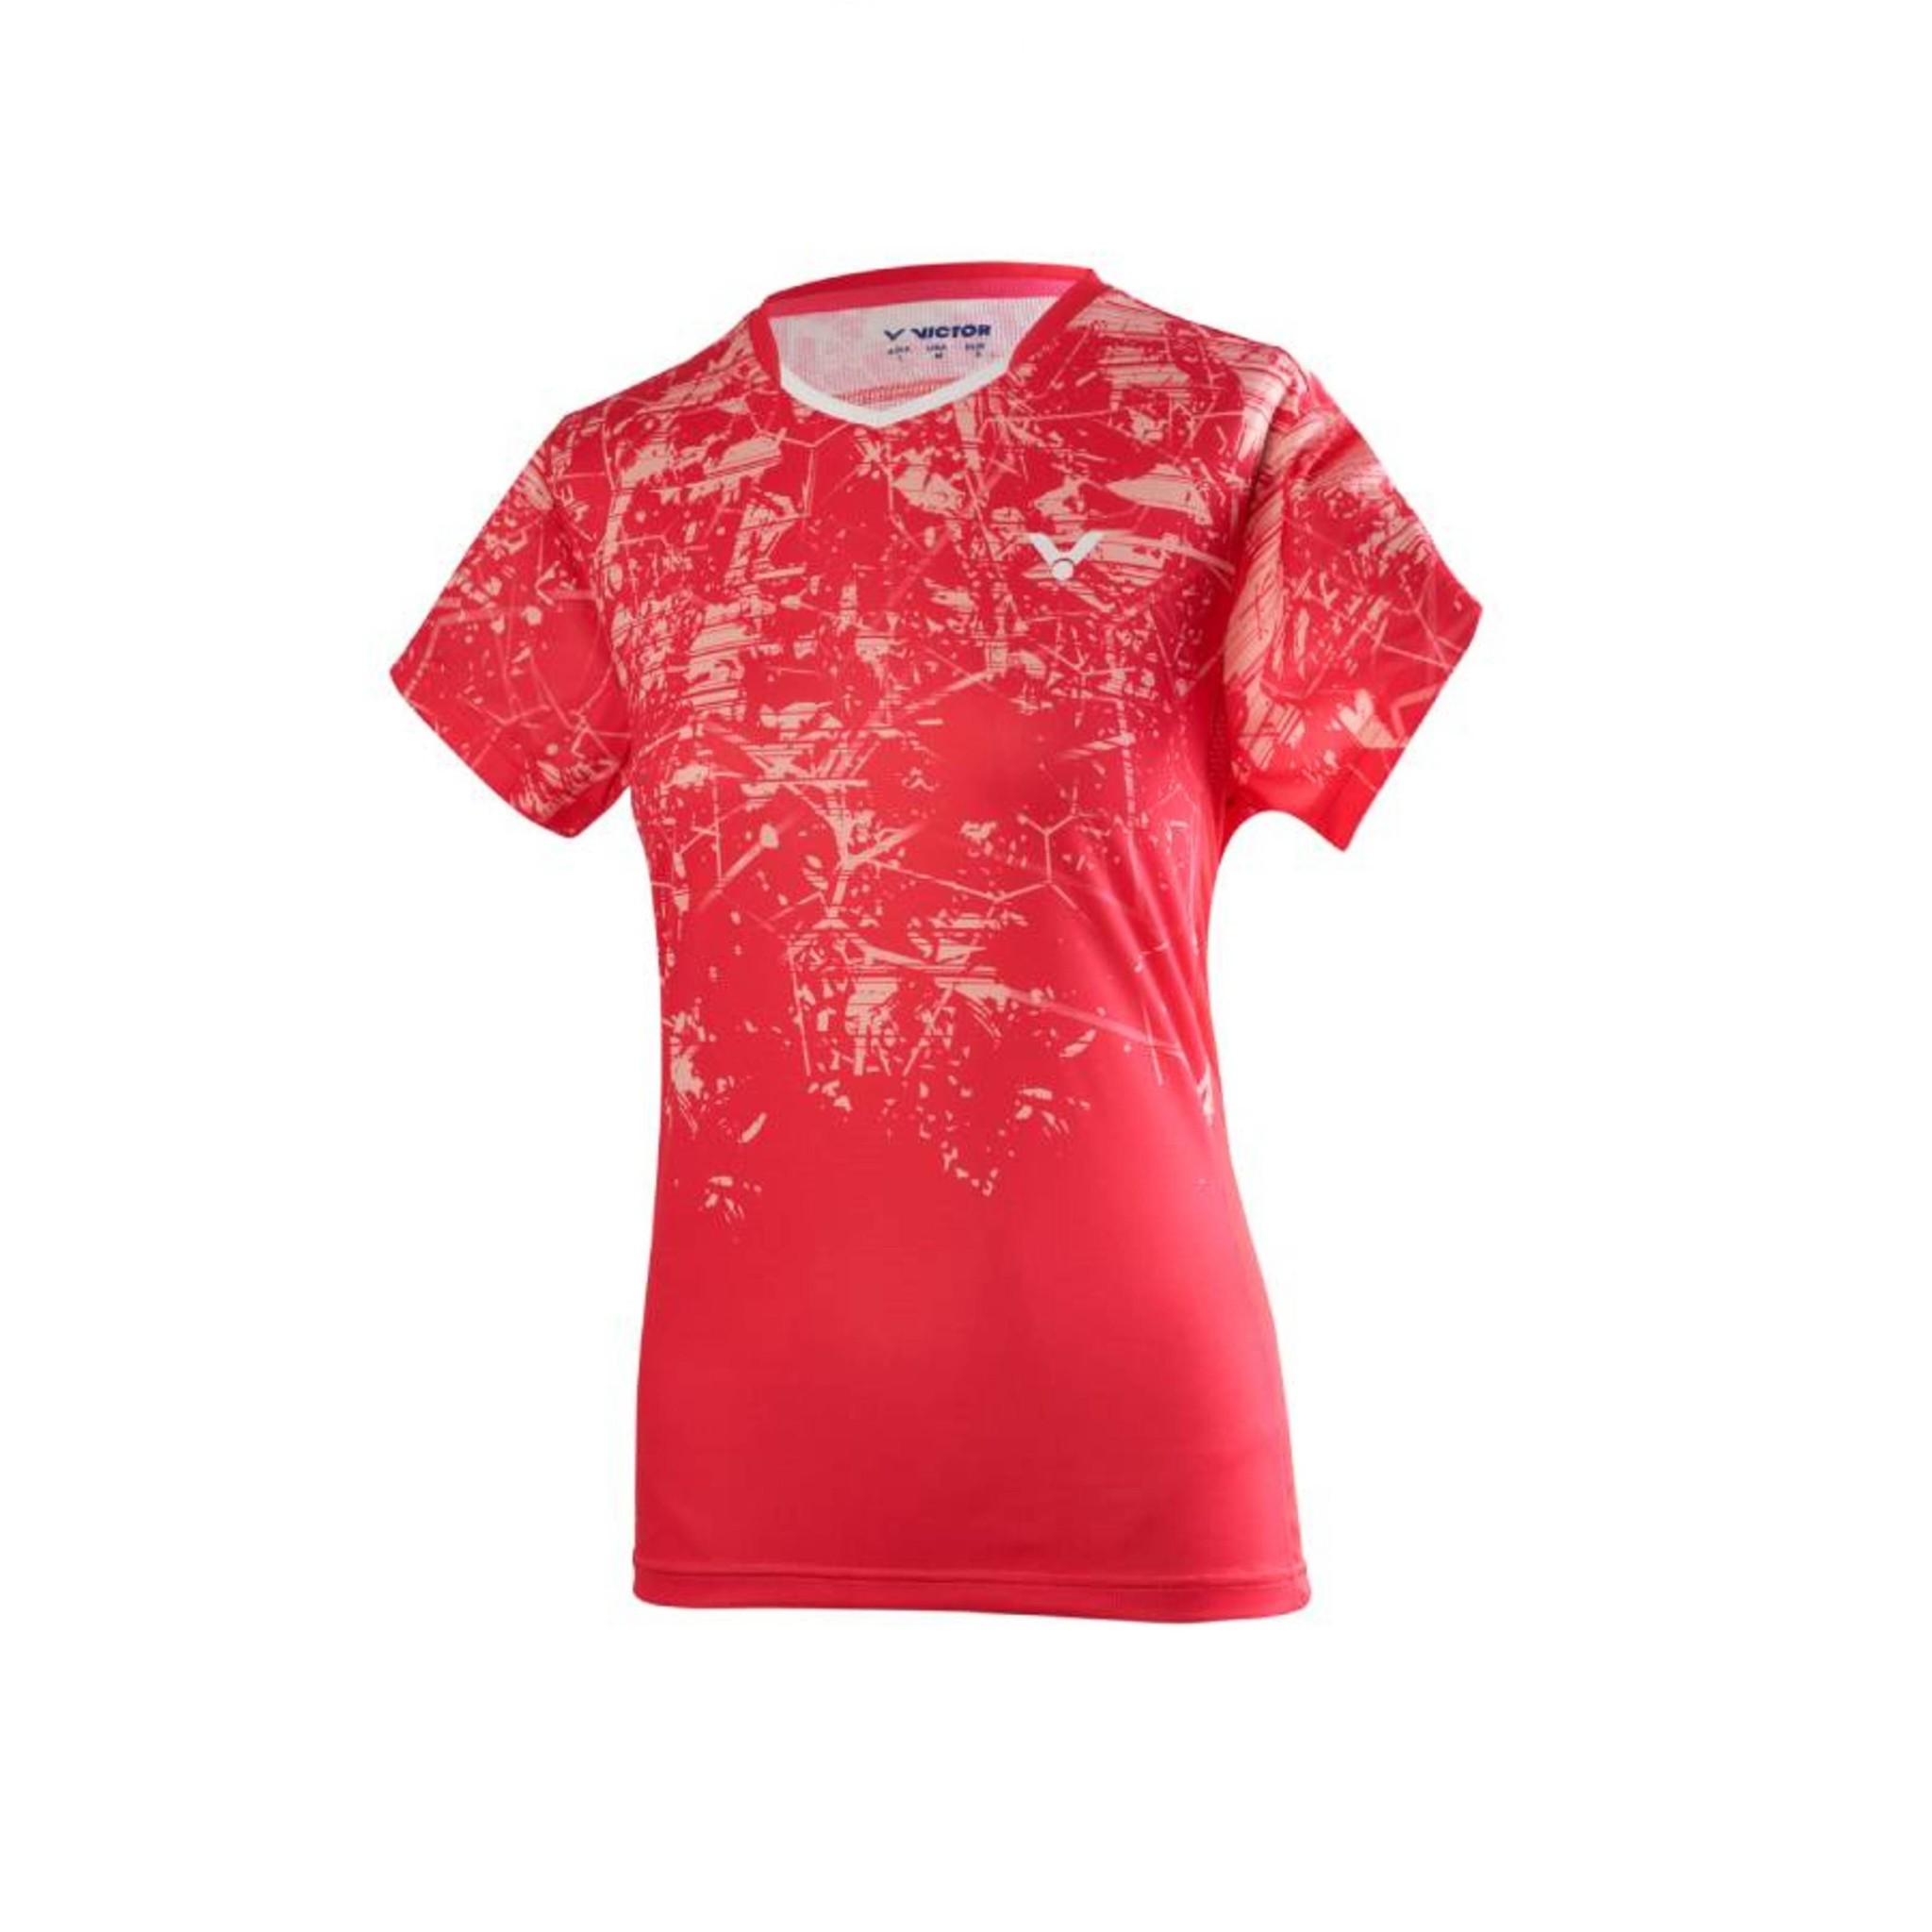 Victor T-Shirt T-01009 Q Rood/Roze - KW FLEX racket speciaalzaak